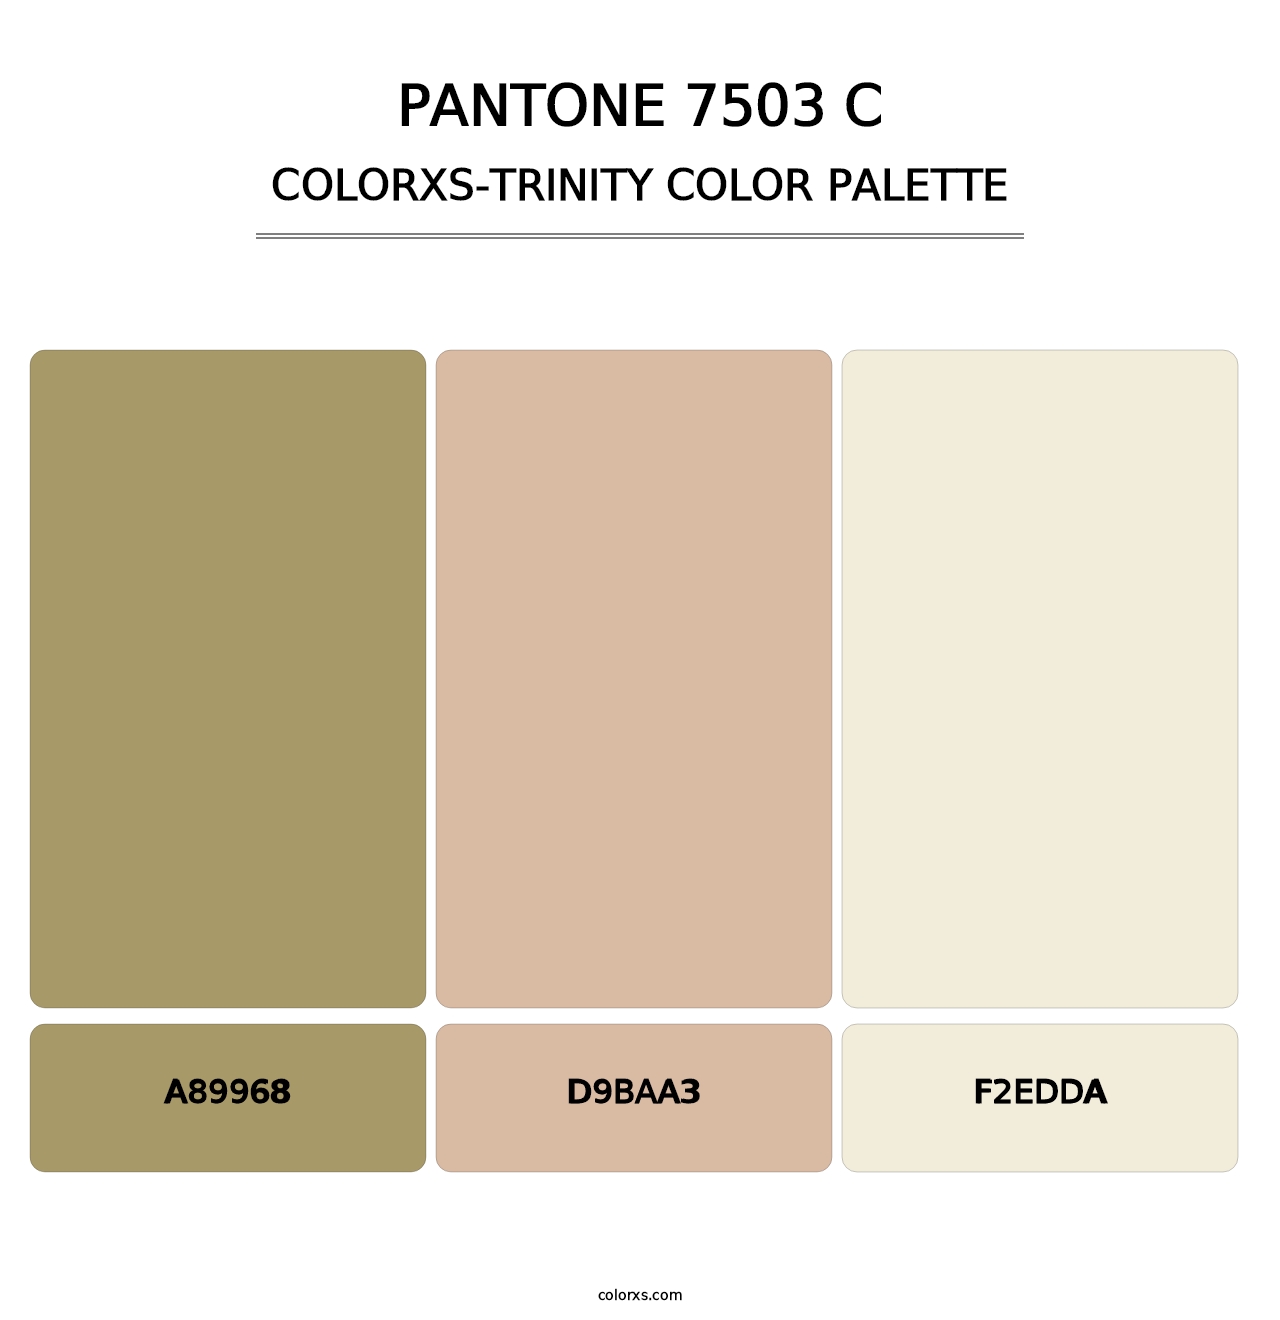 PANTONE 7503 C - Colorxs Trinity Palette